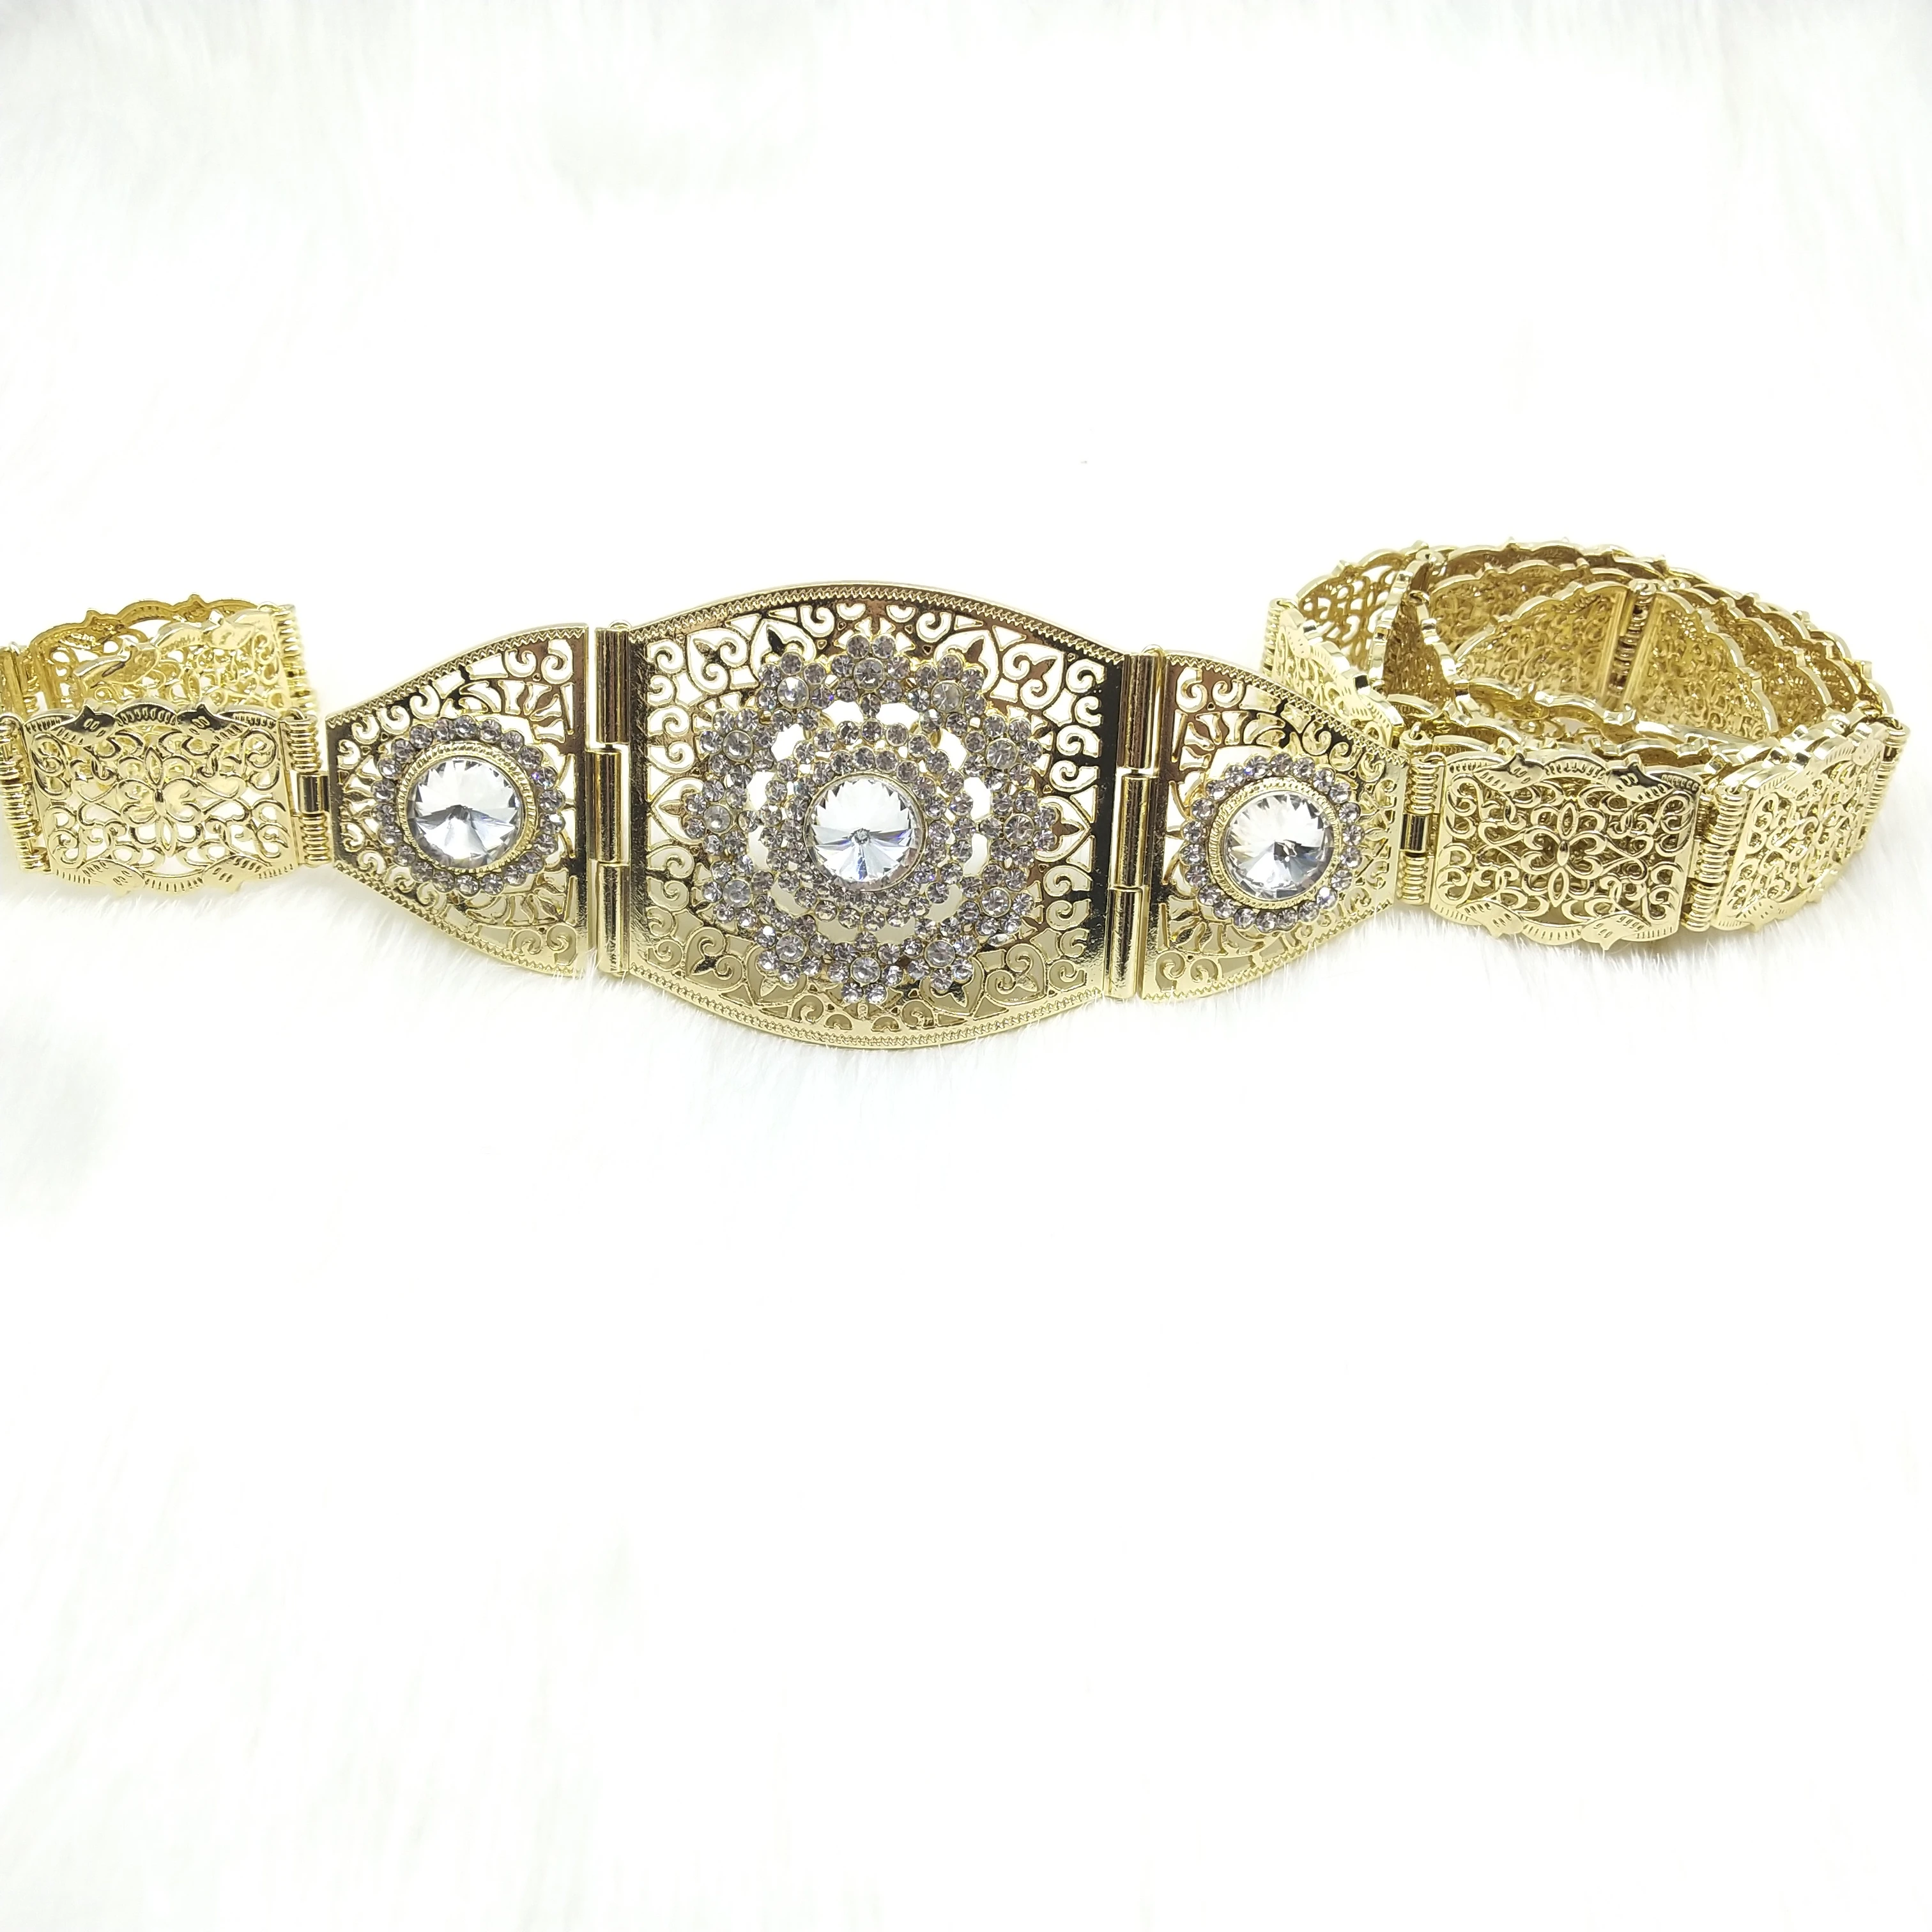 Made in China superior quality	bridal accessories belt wedding accessoris wonen belt